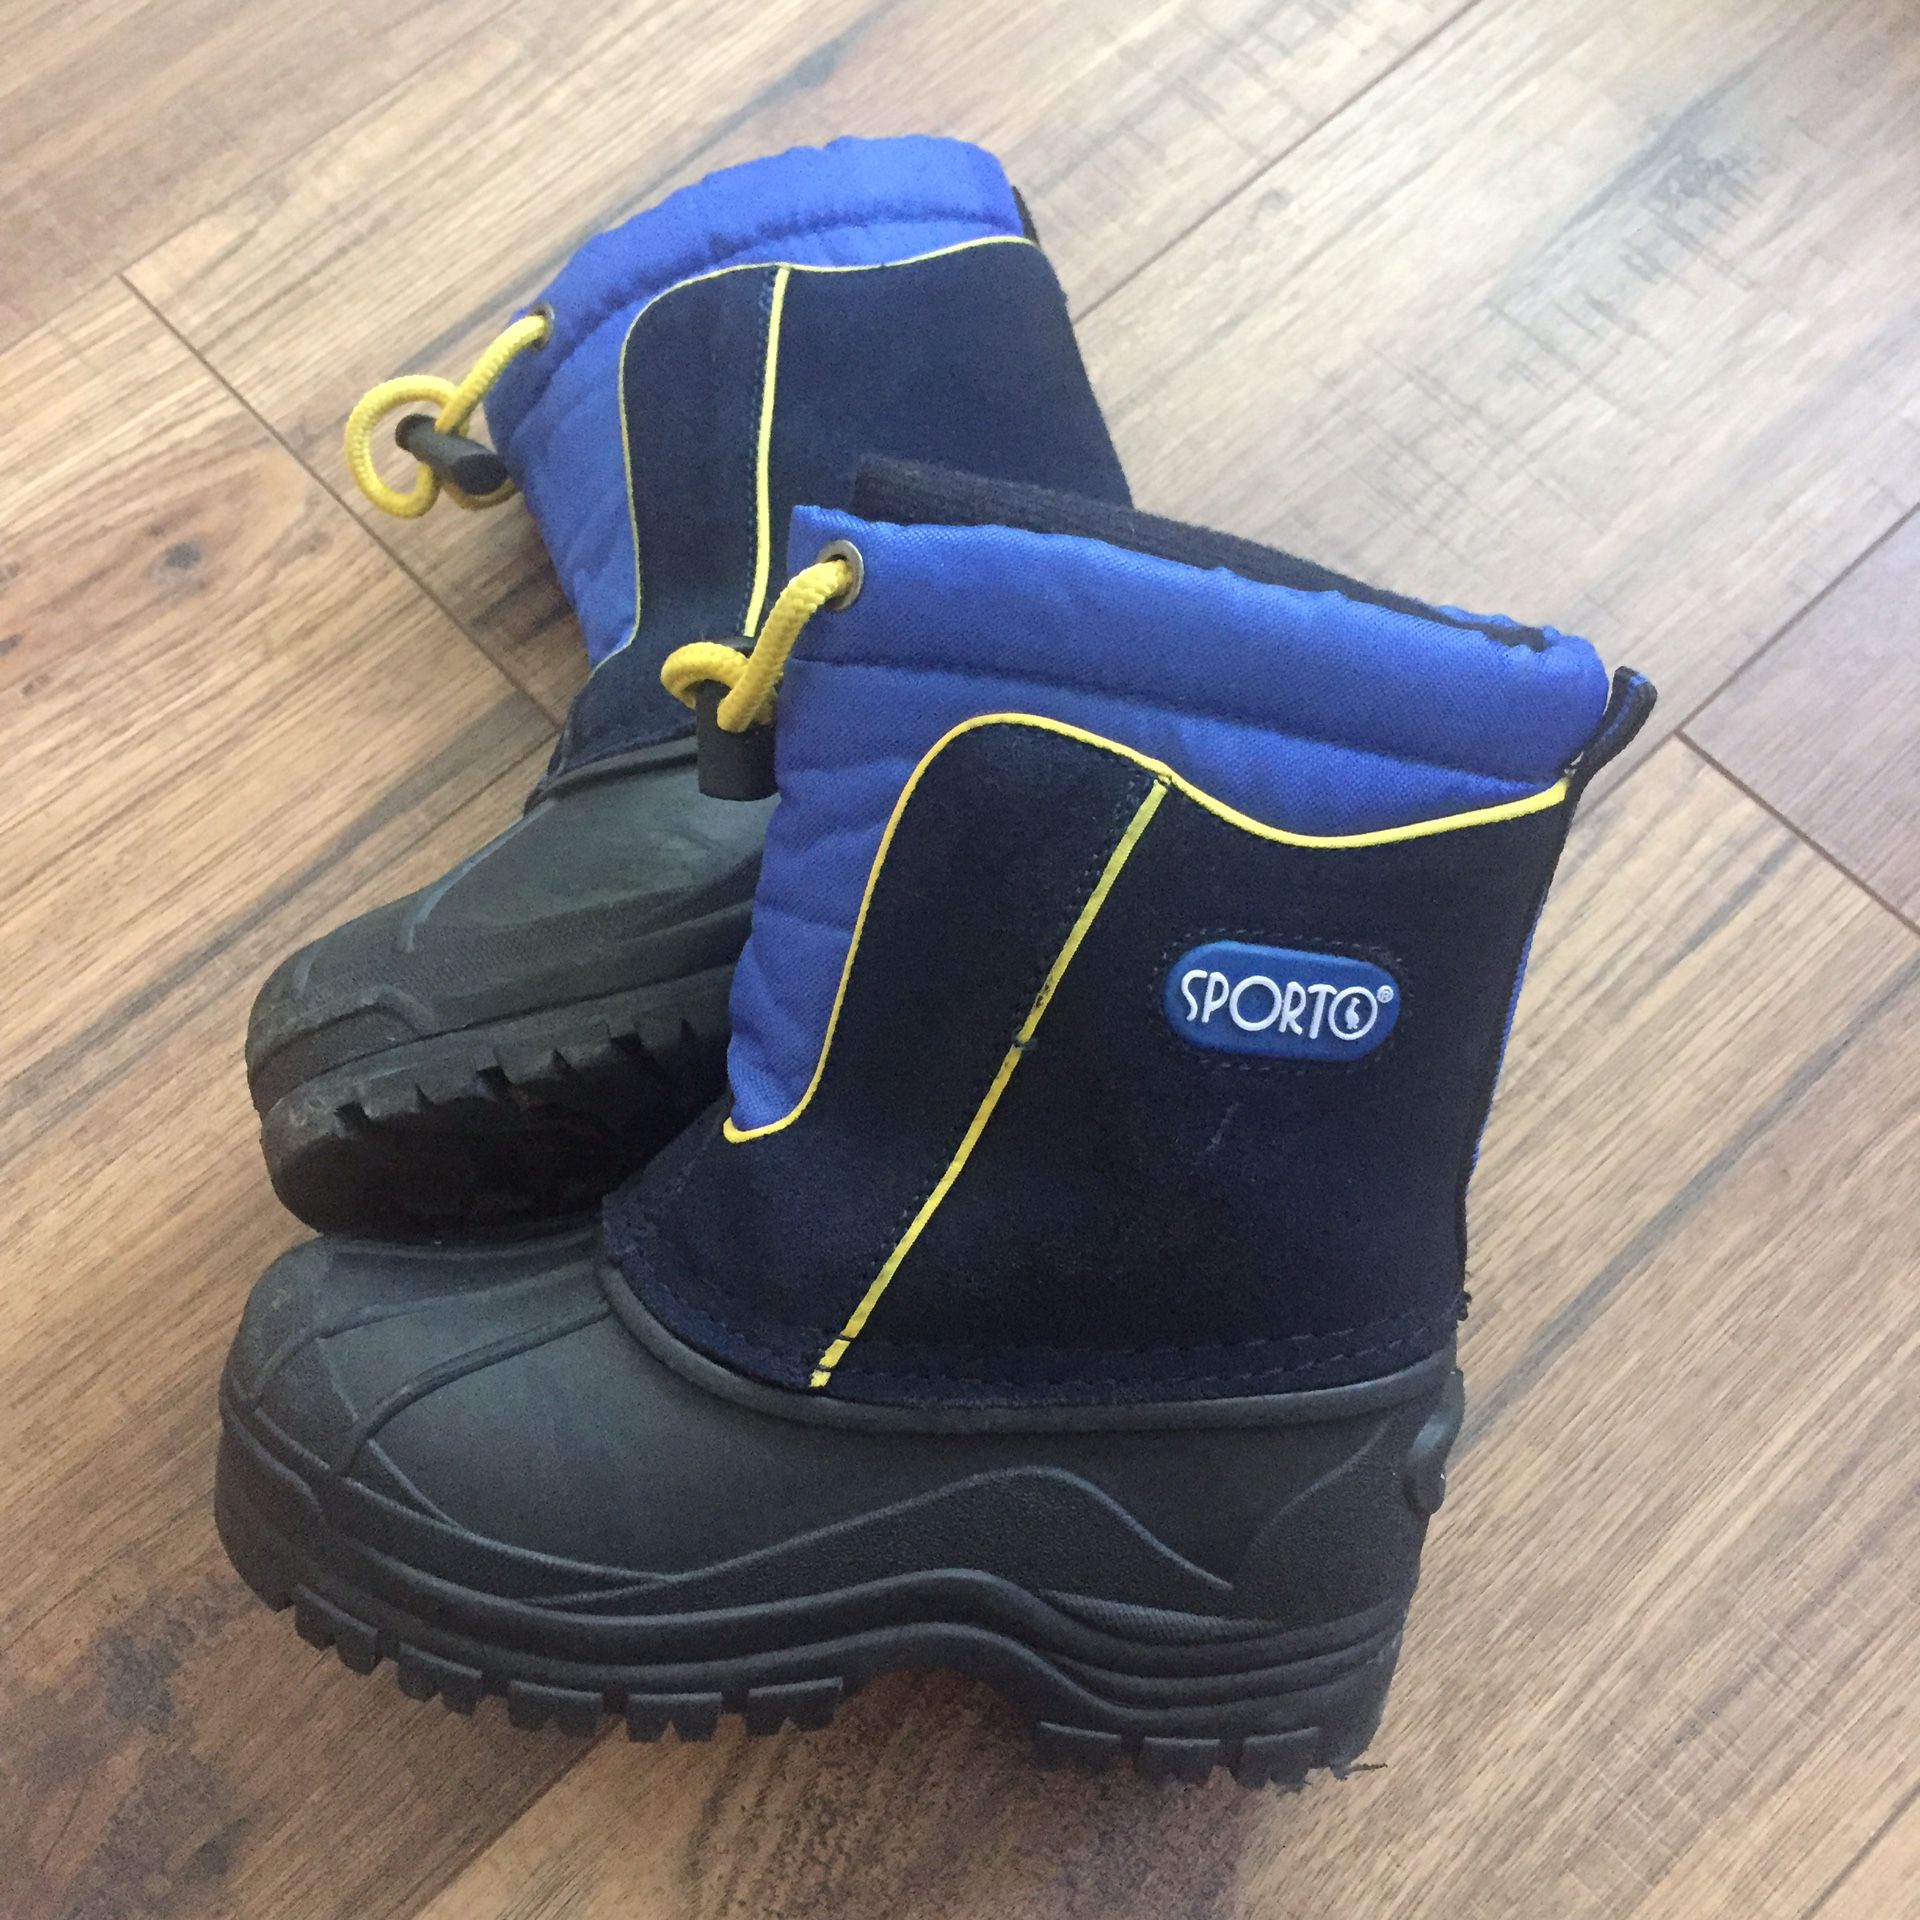 Kid’s snow boots